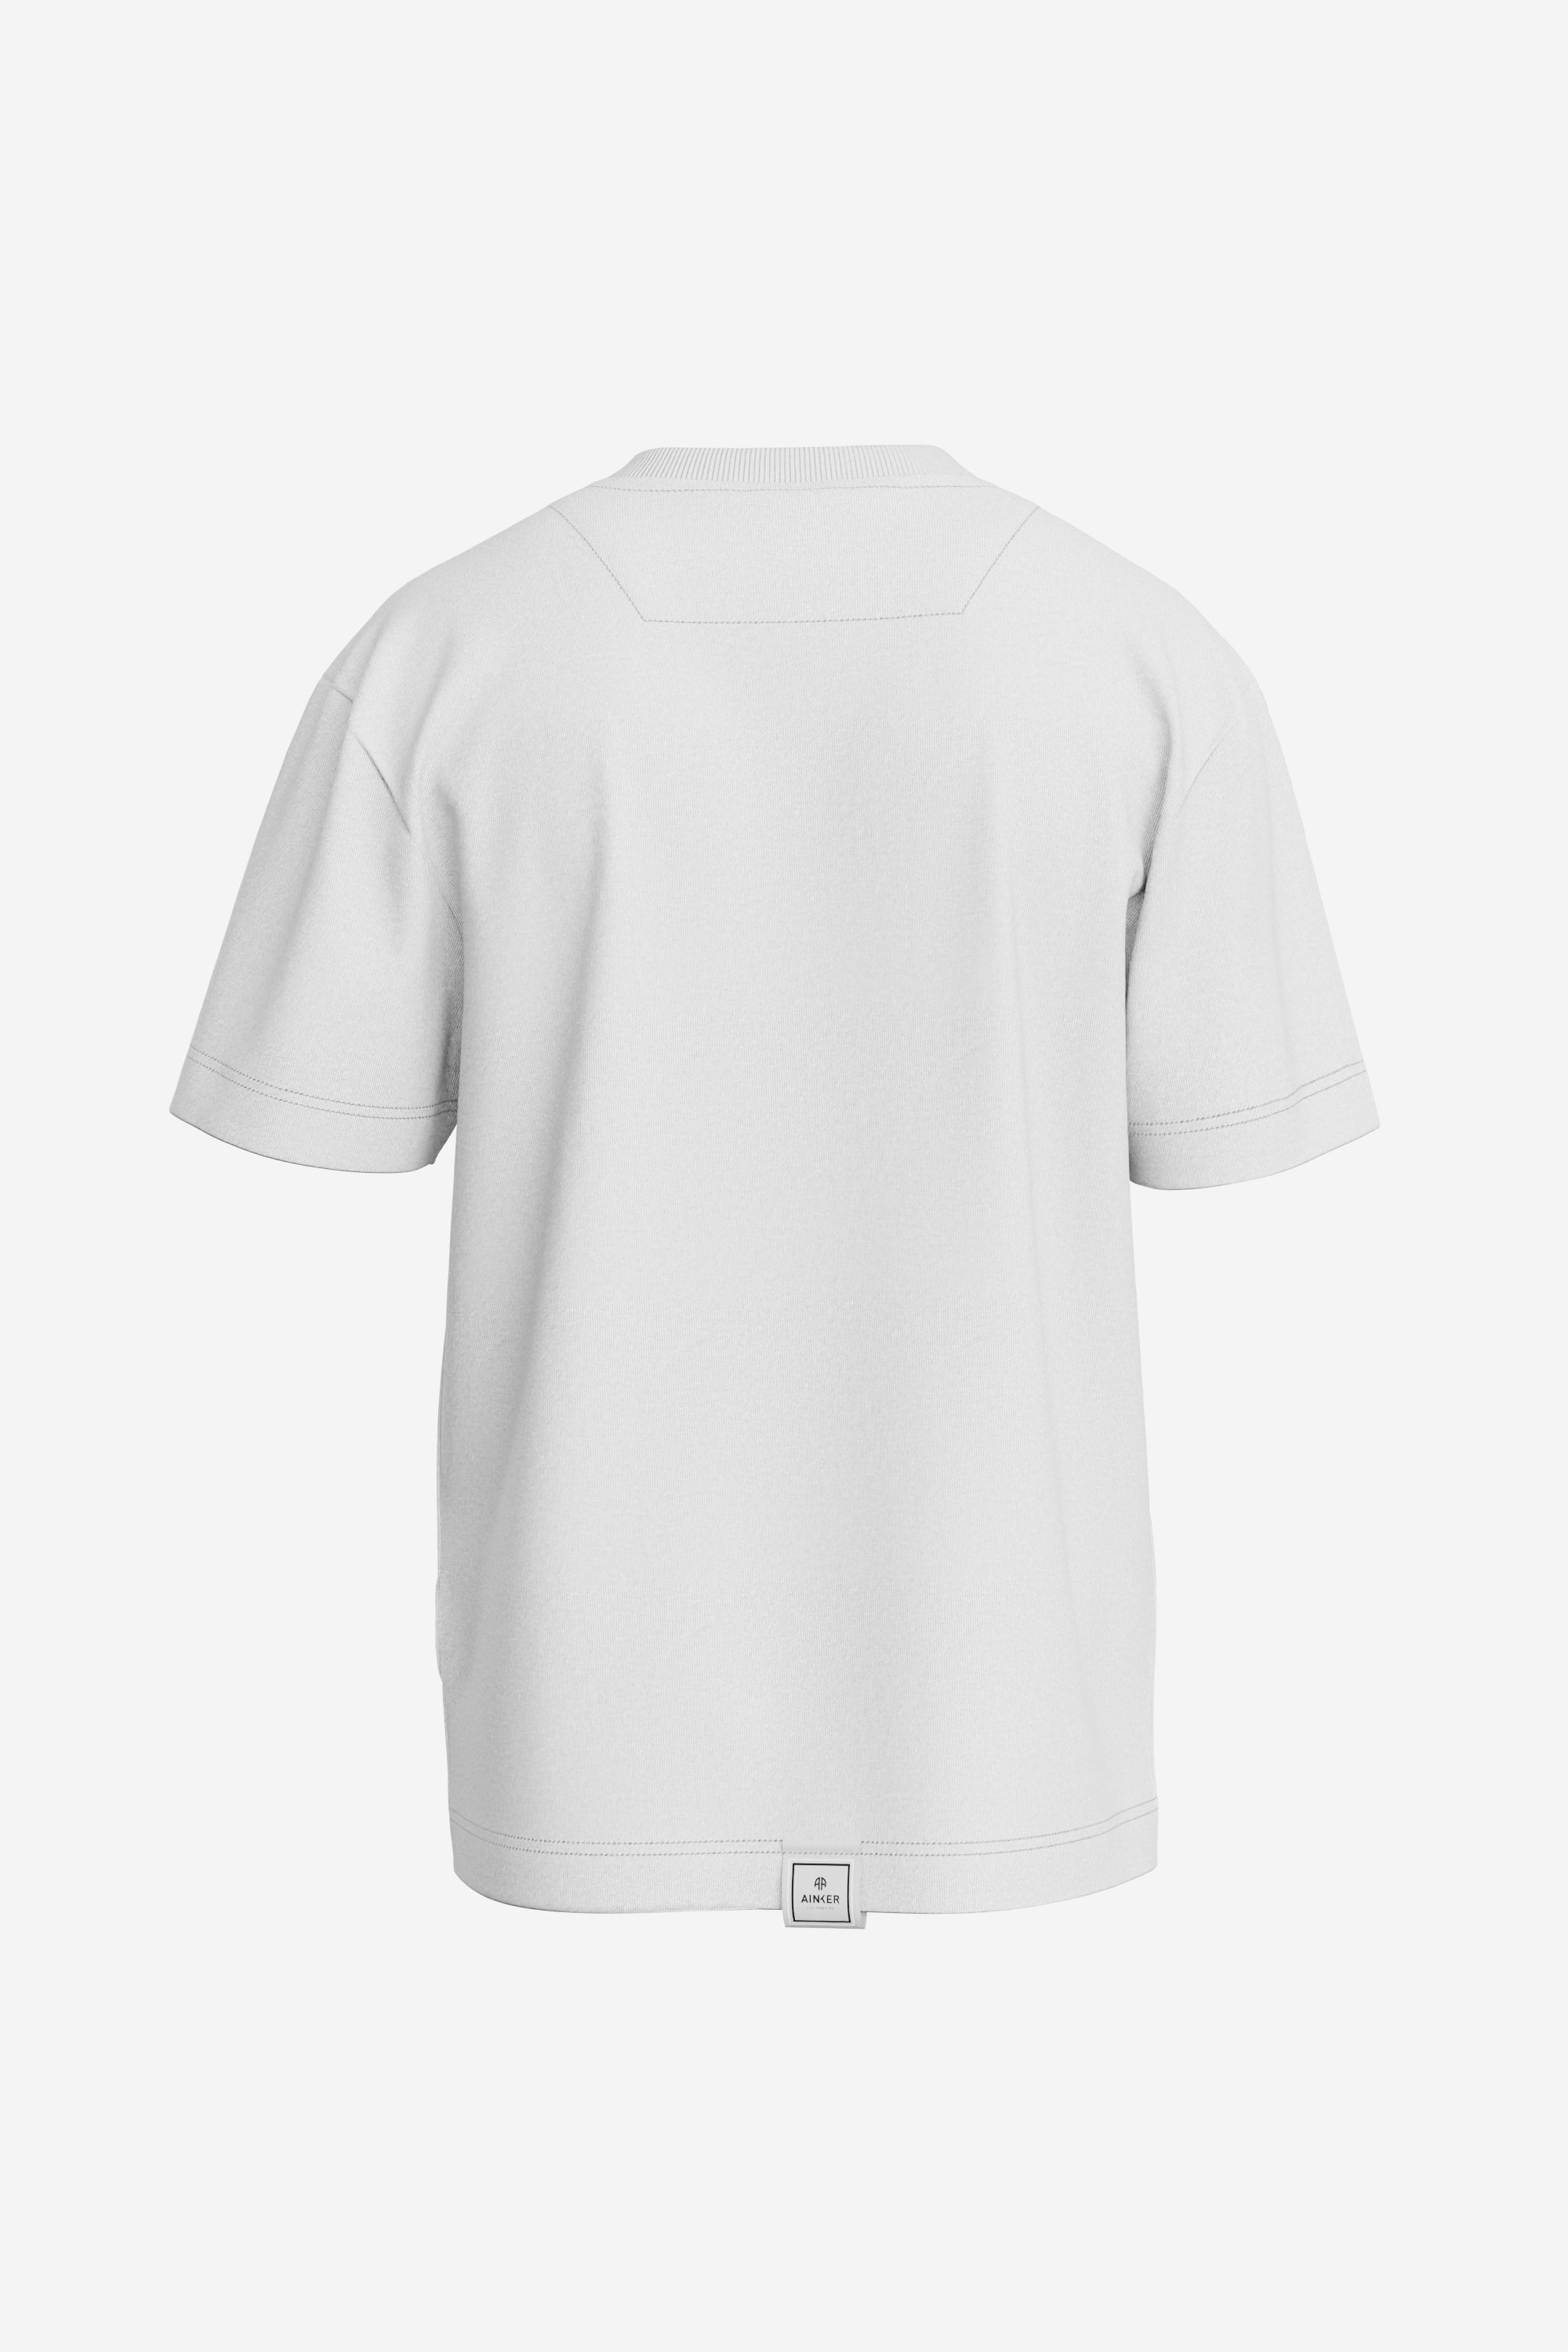 Signiture White Mercerize T-Shirt